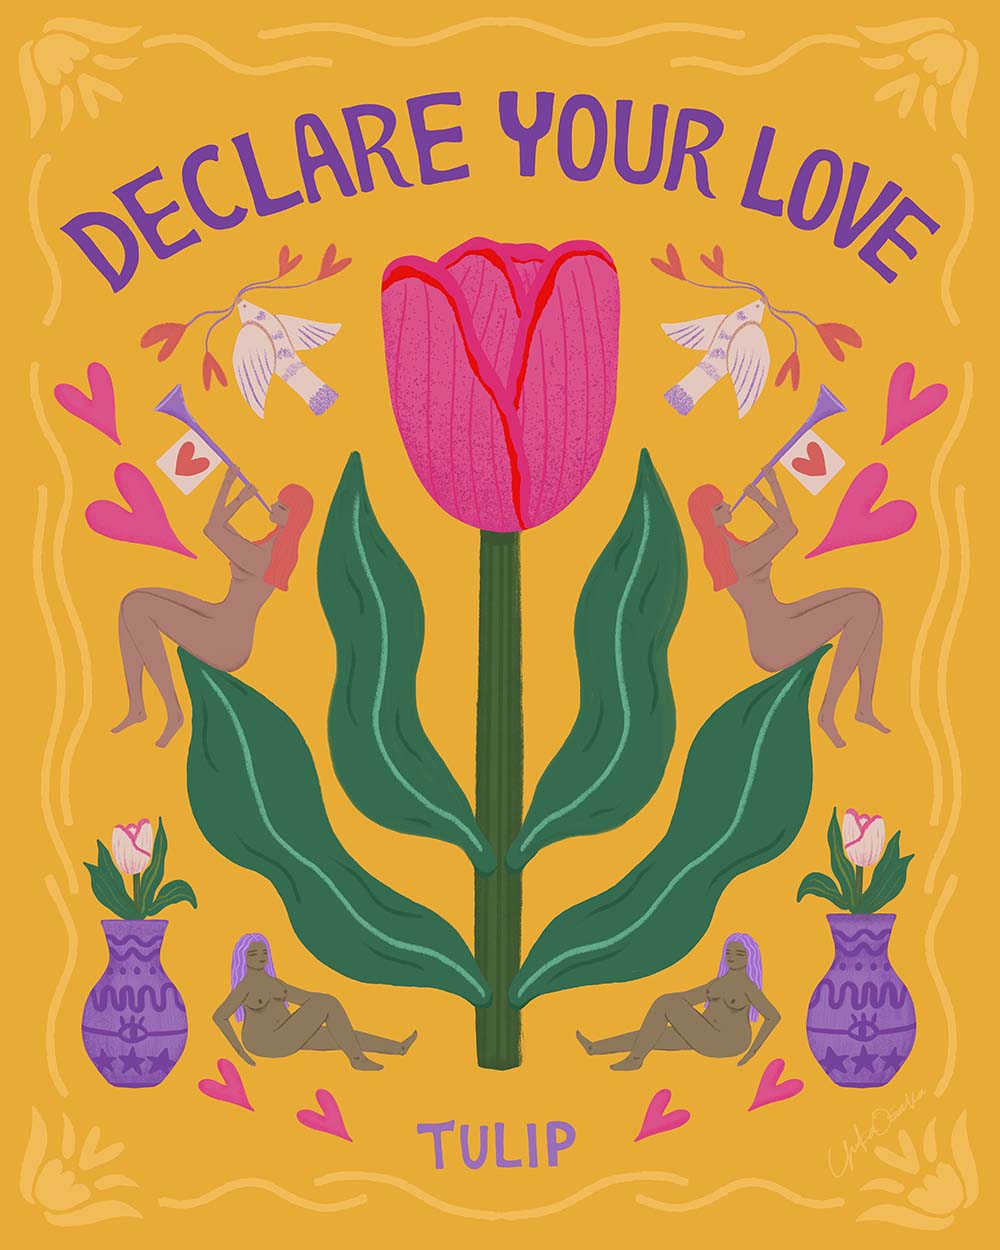 Declare Your Love  Tulip art print by Yuka Osaka